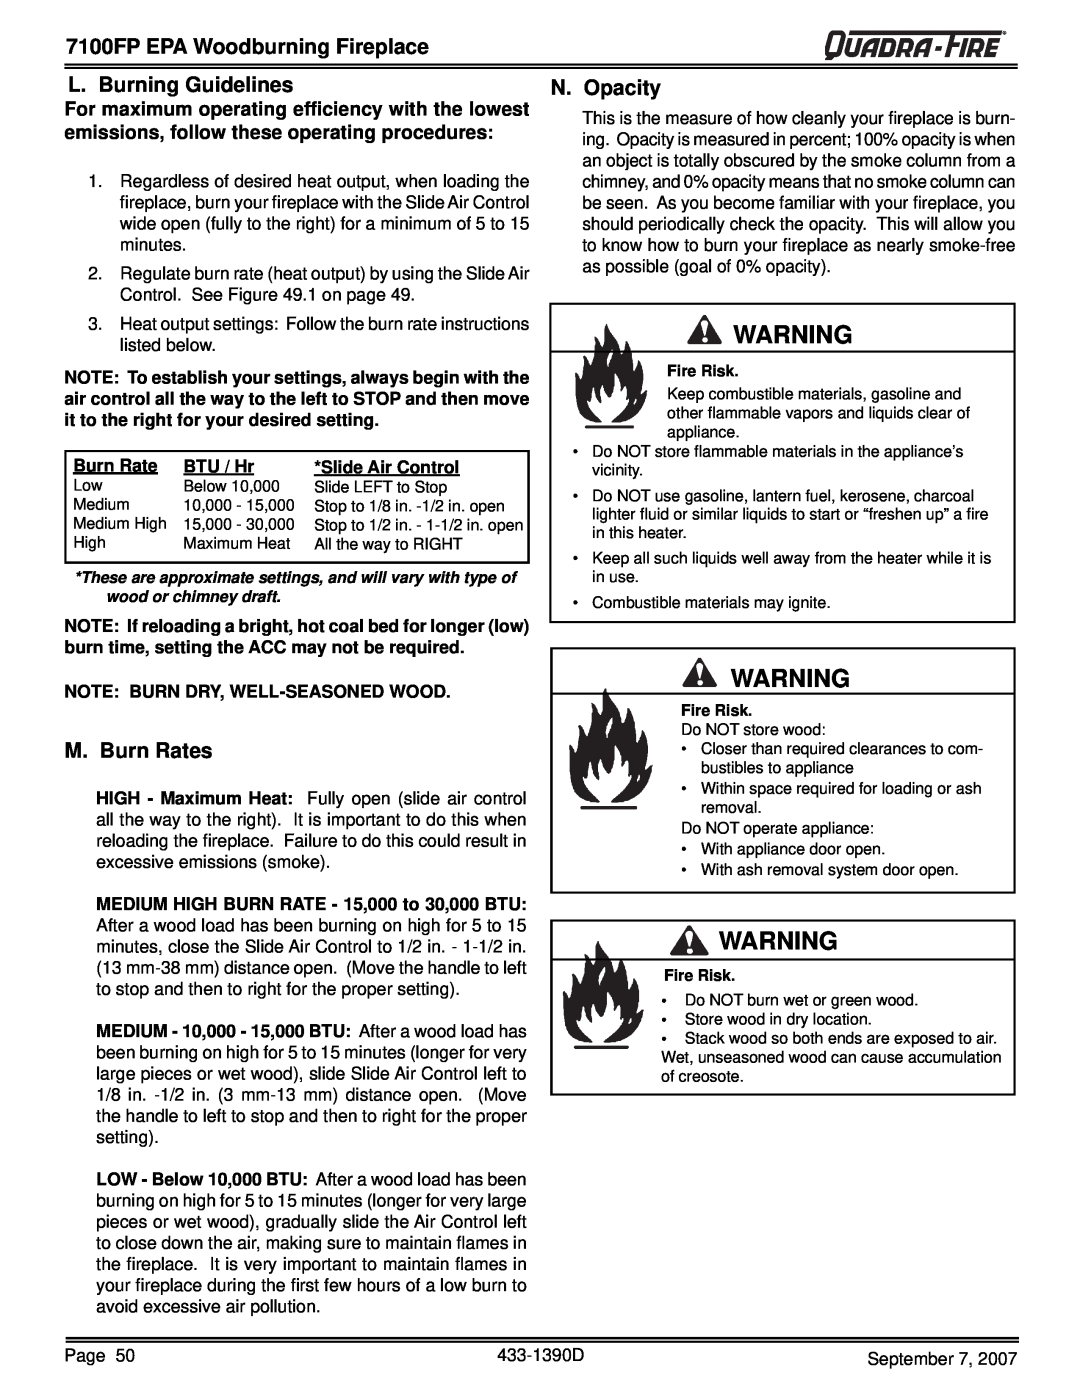 Quadra-Fire 7100FP-GD-B 7100FP EPA Woodburning Fireplace, L. Burning Guidelines, N. Opacity, M. Burn Rates, BTU / Hr 